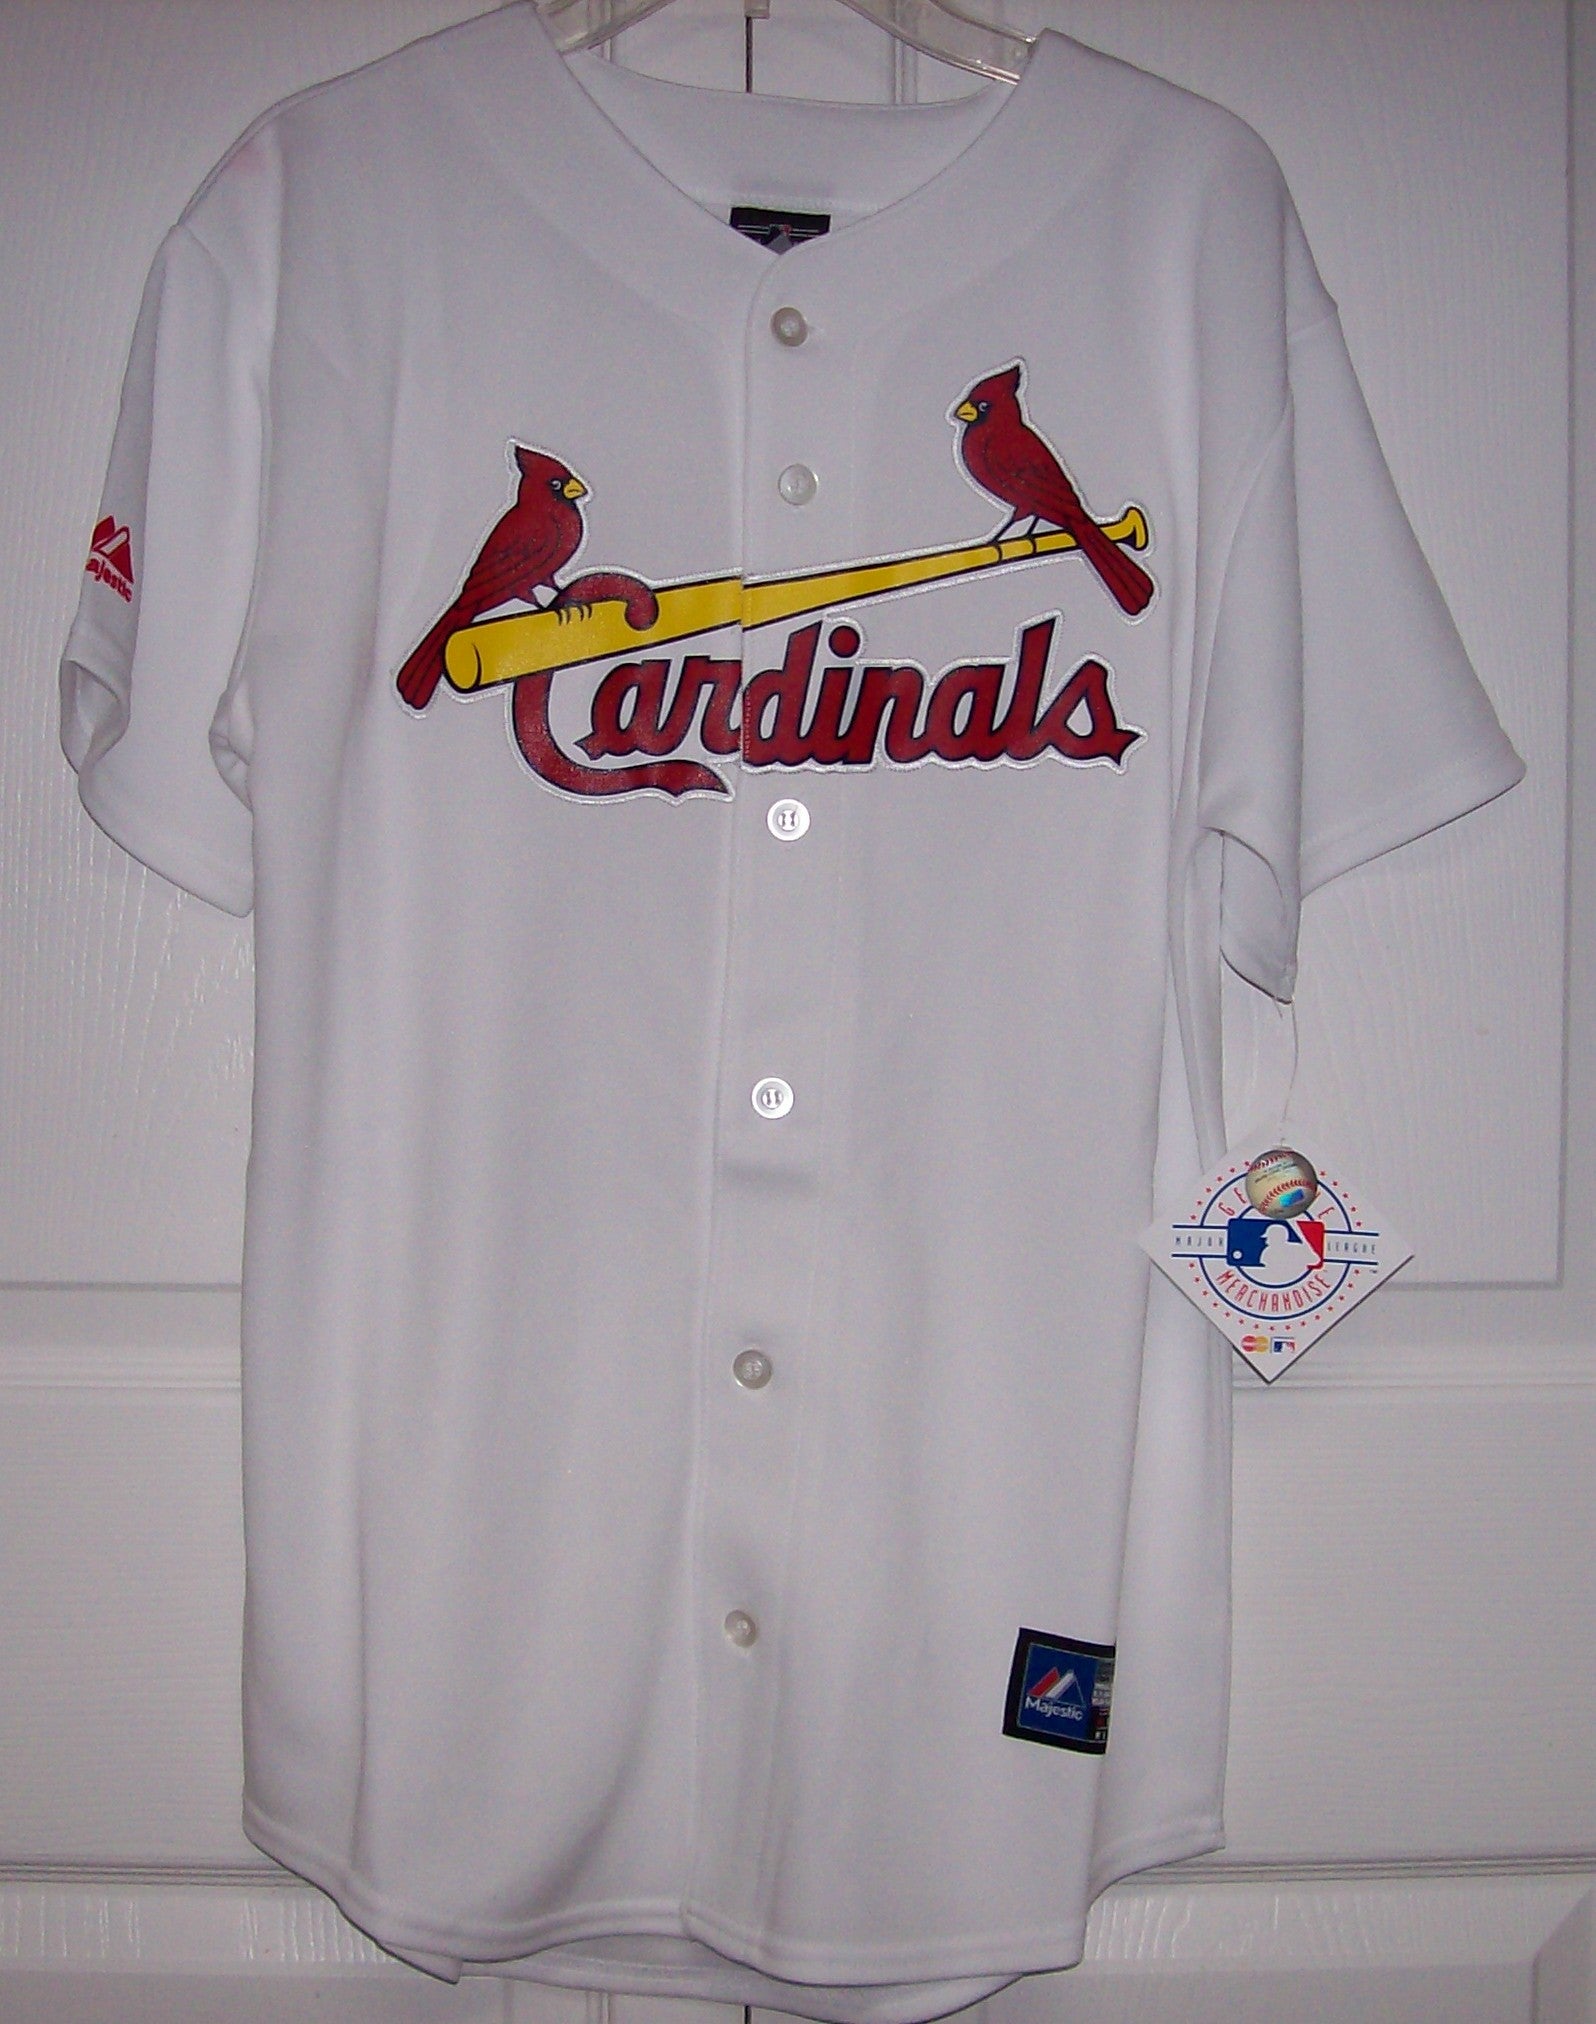 MOLINA St. Louis Cardinals INFANT Majestic MLB Baseball jersey HOME White